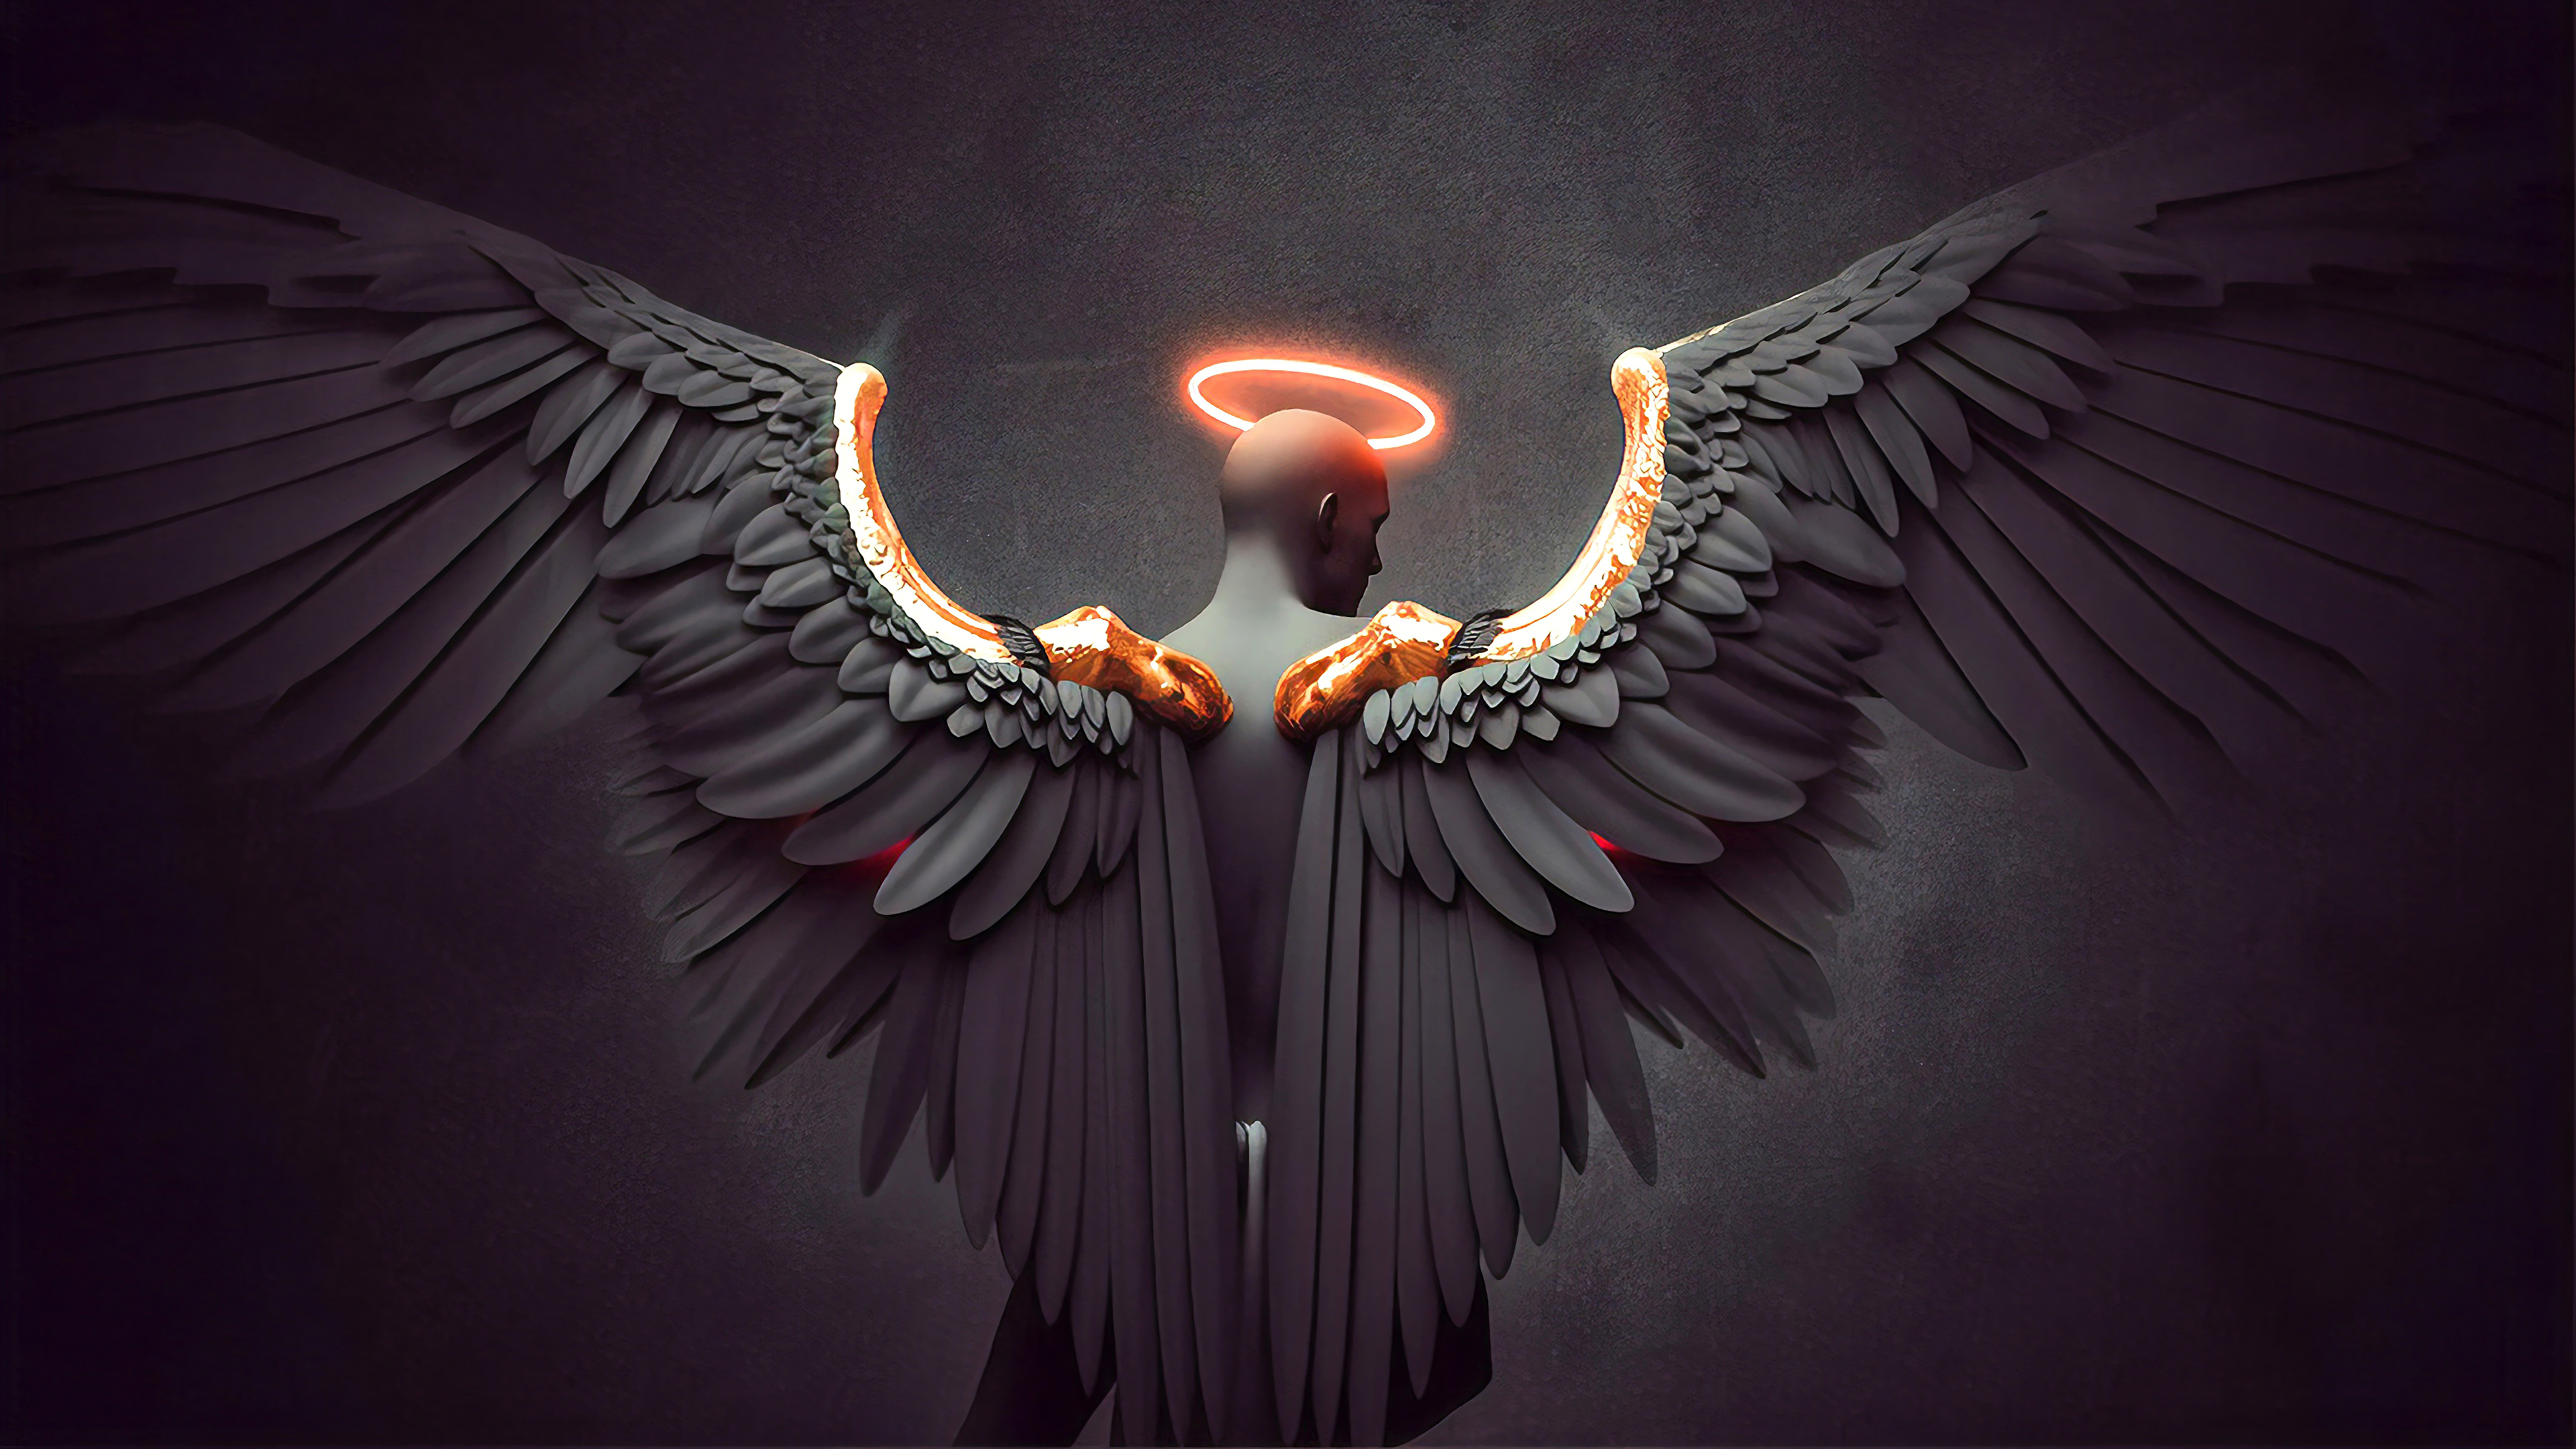 General 3840x2160 digital art artwork fantasy art angel wings dark angel wings concept art gold fictional DeviantArt